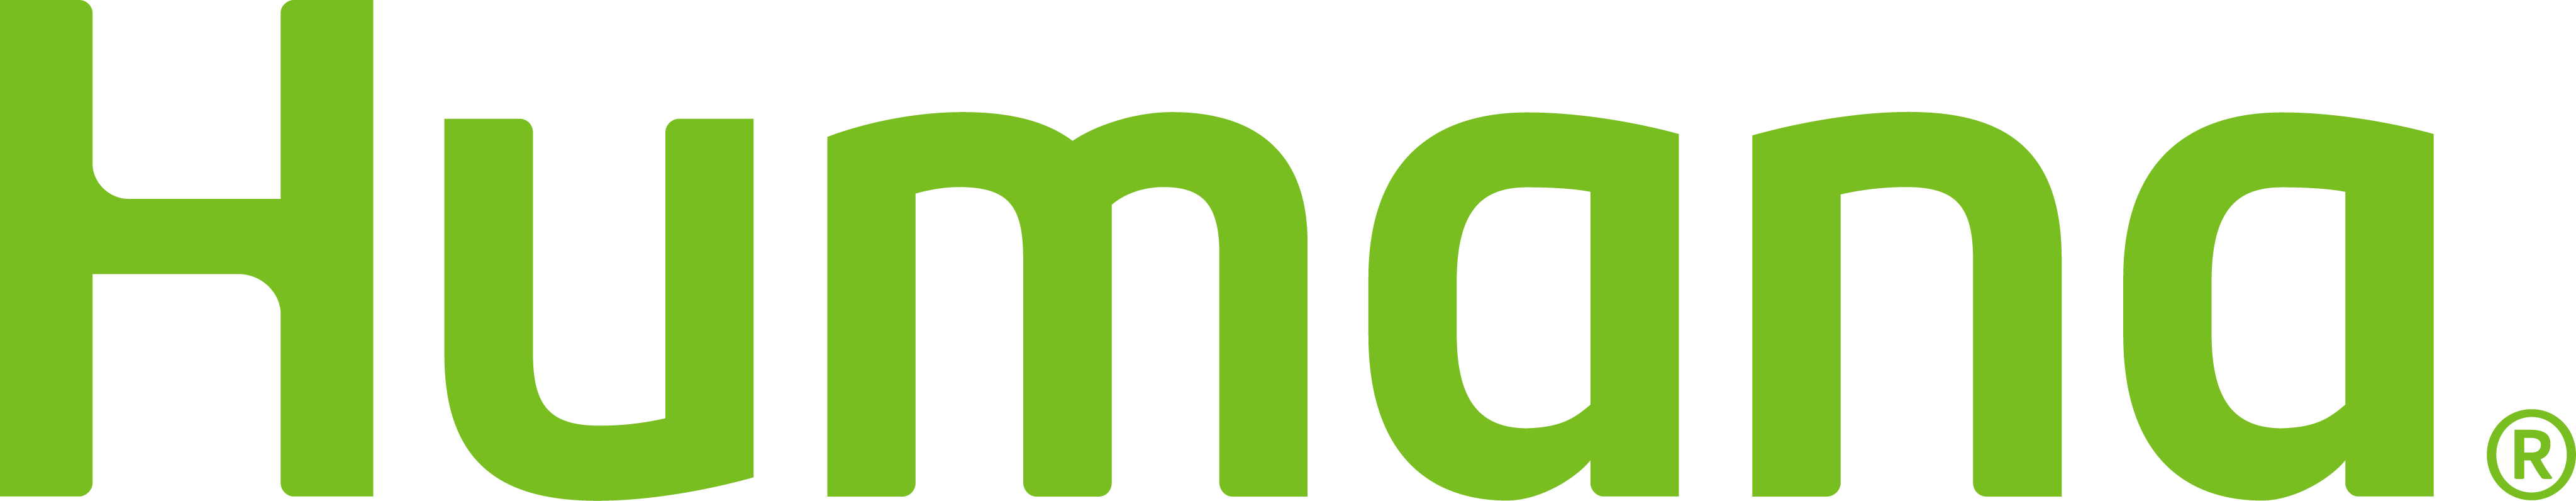 Hum Logo R NoPad Green RGB